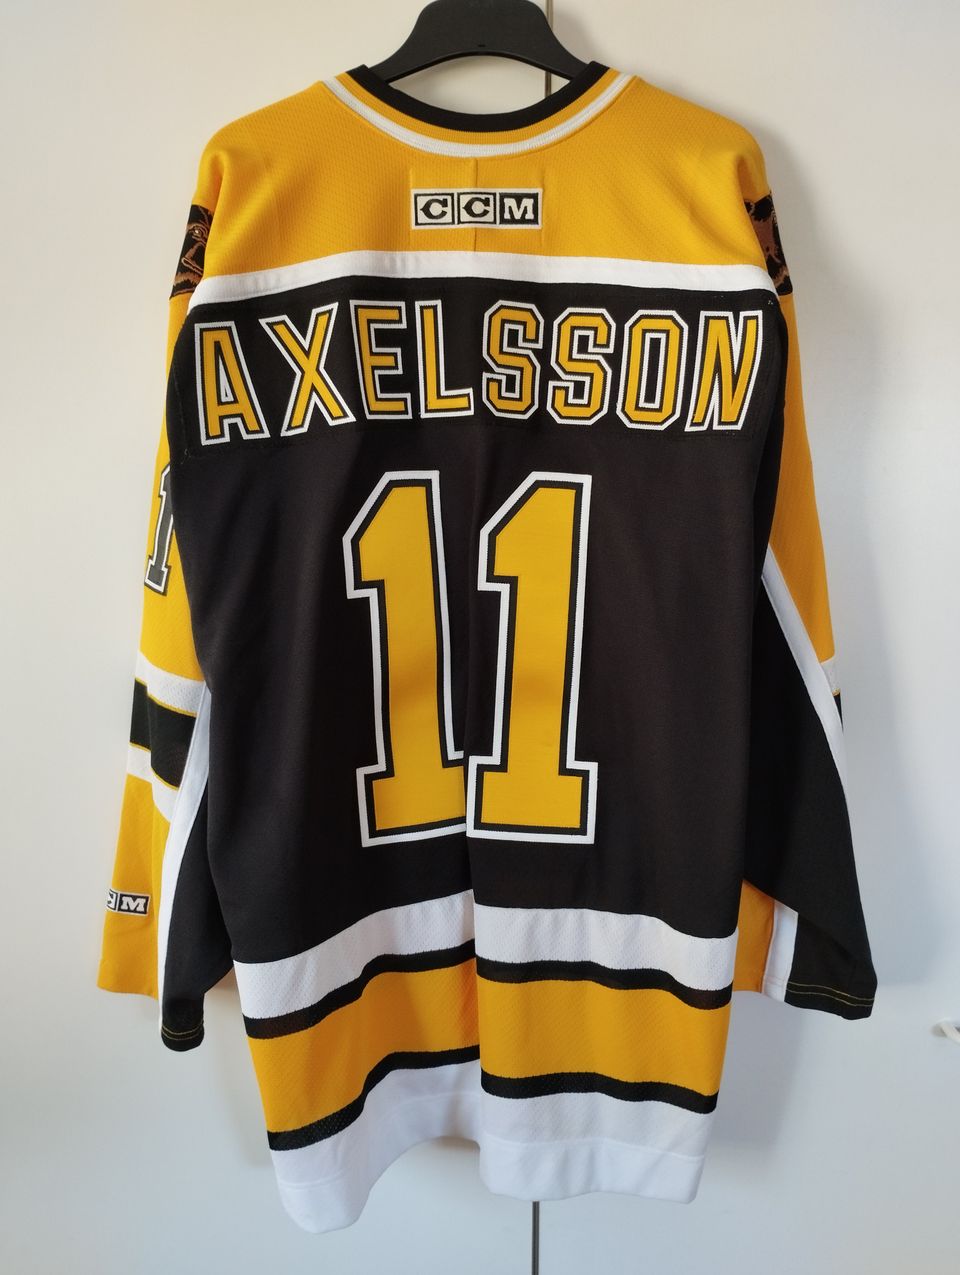 Aito Boston Bruins fanipaita Axelsson #11